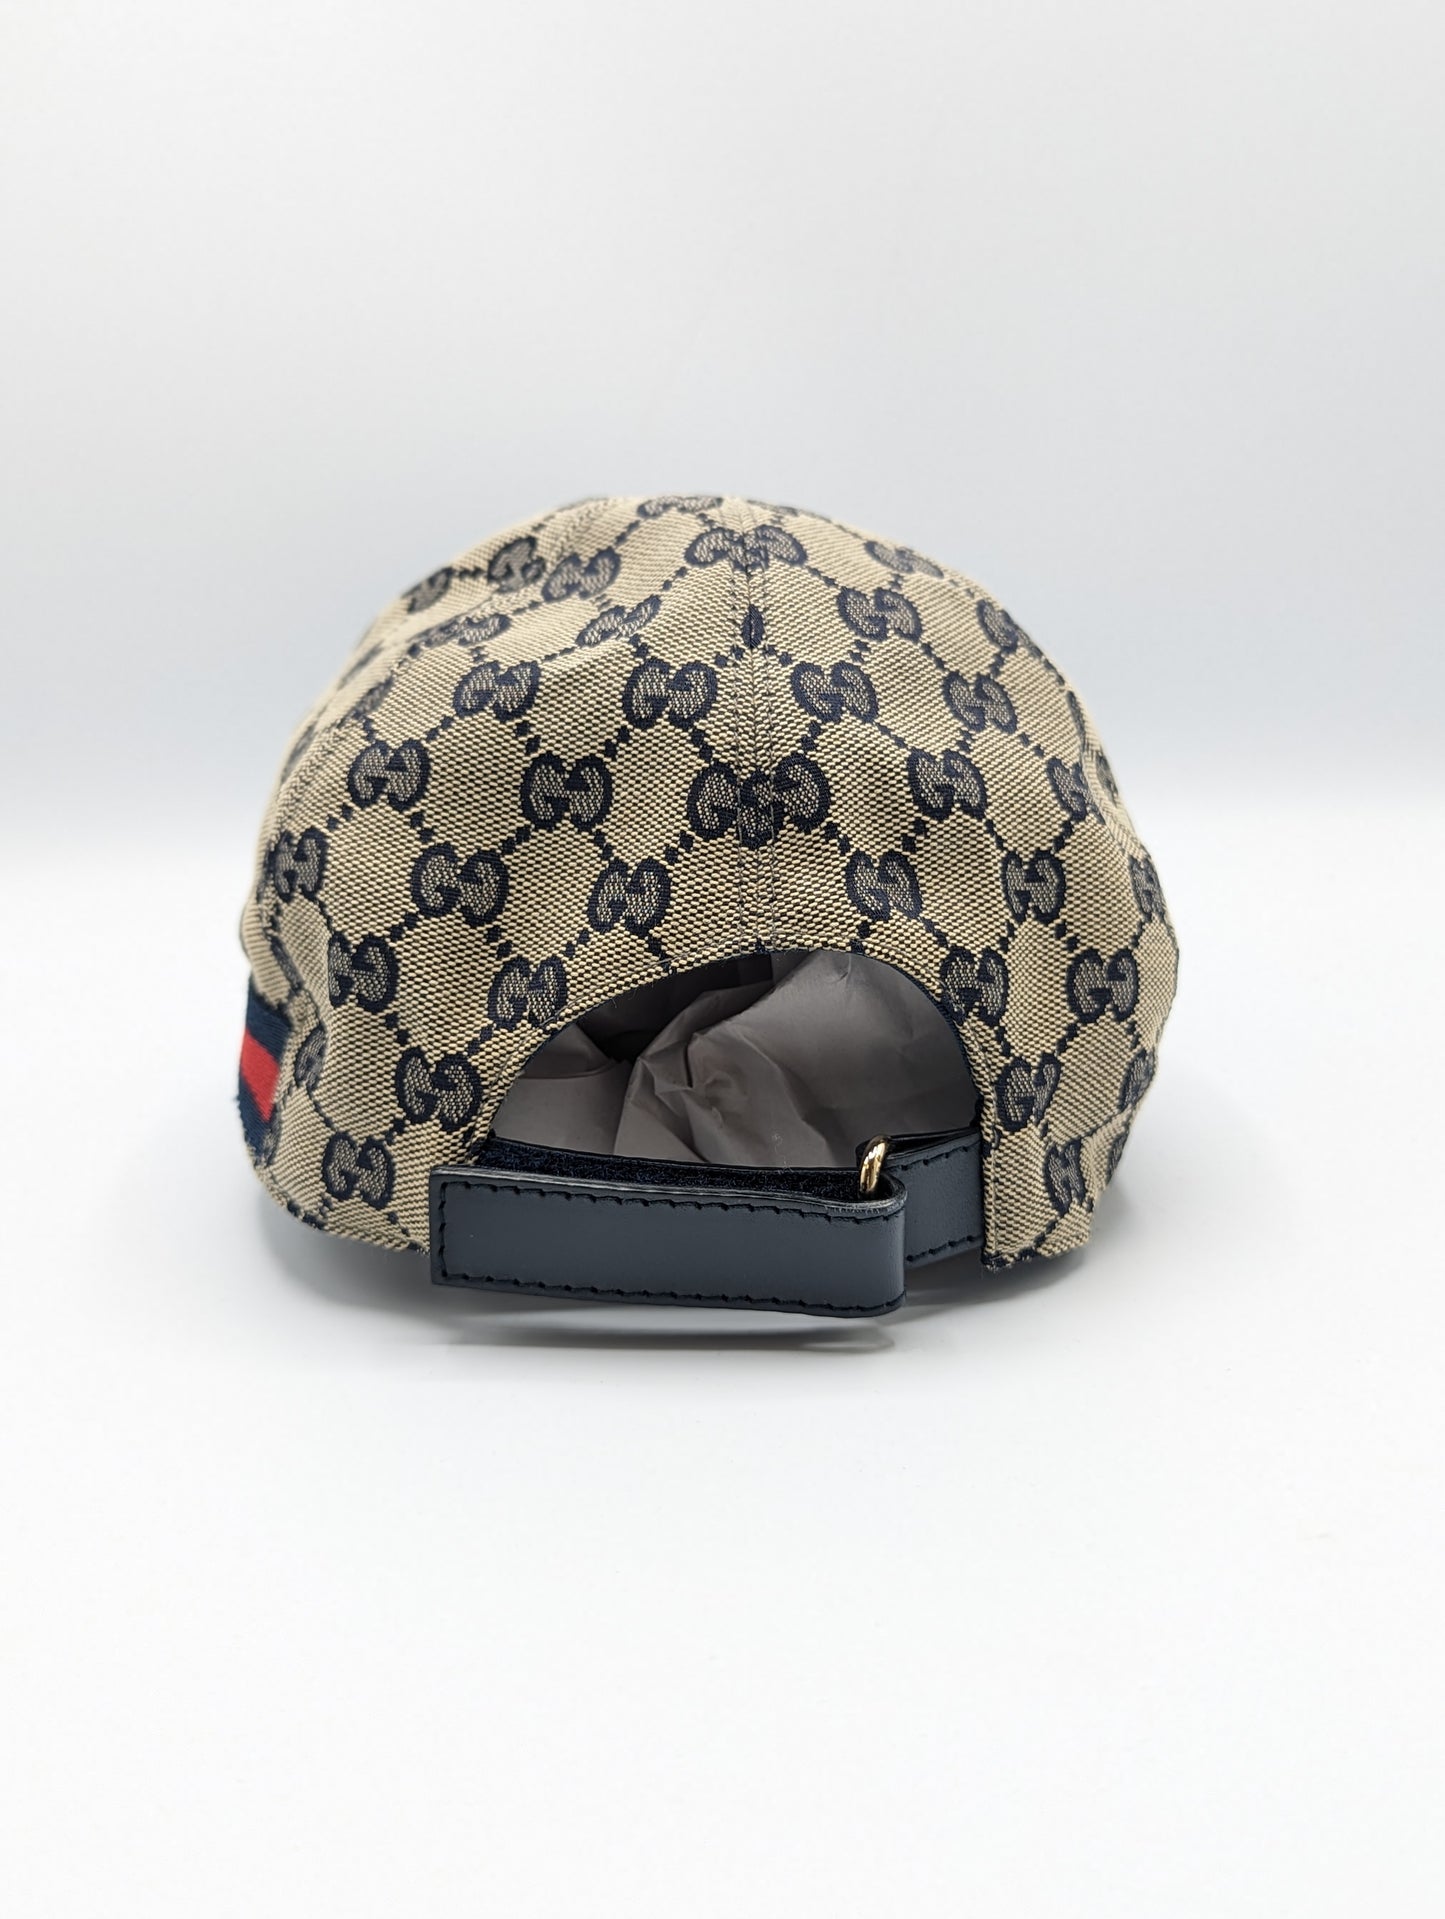 Gucci Monogram Navy Web Baseball Hat Size Large